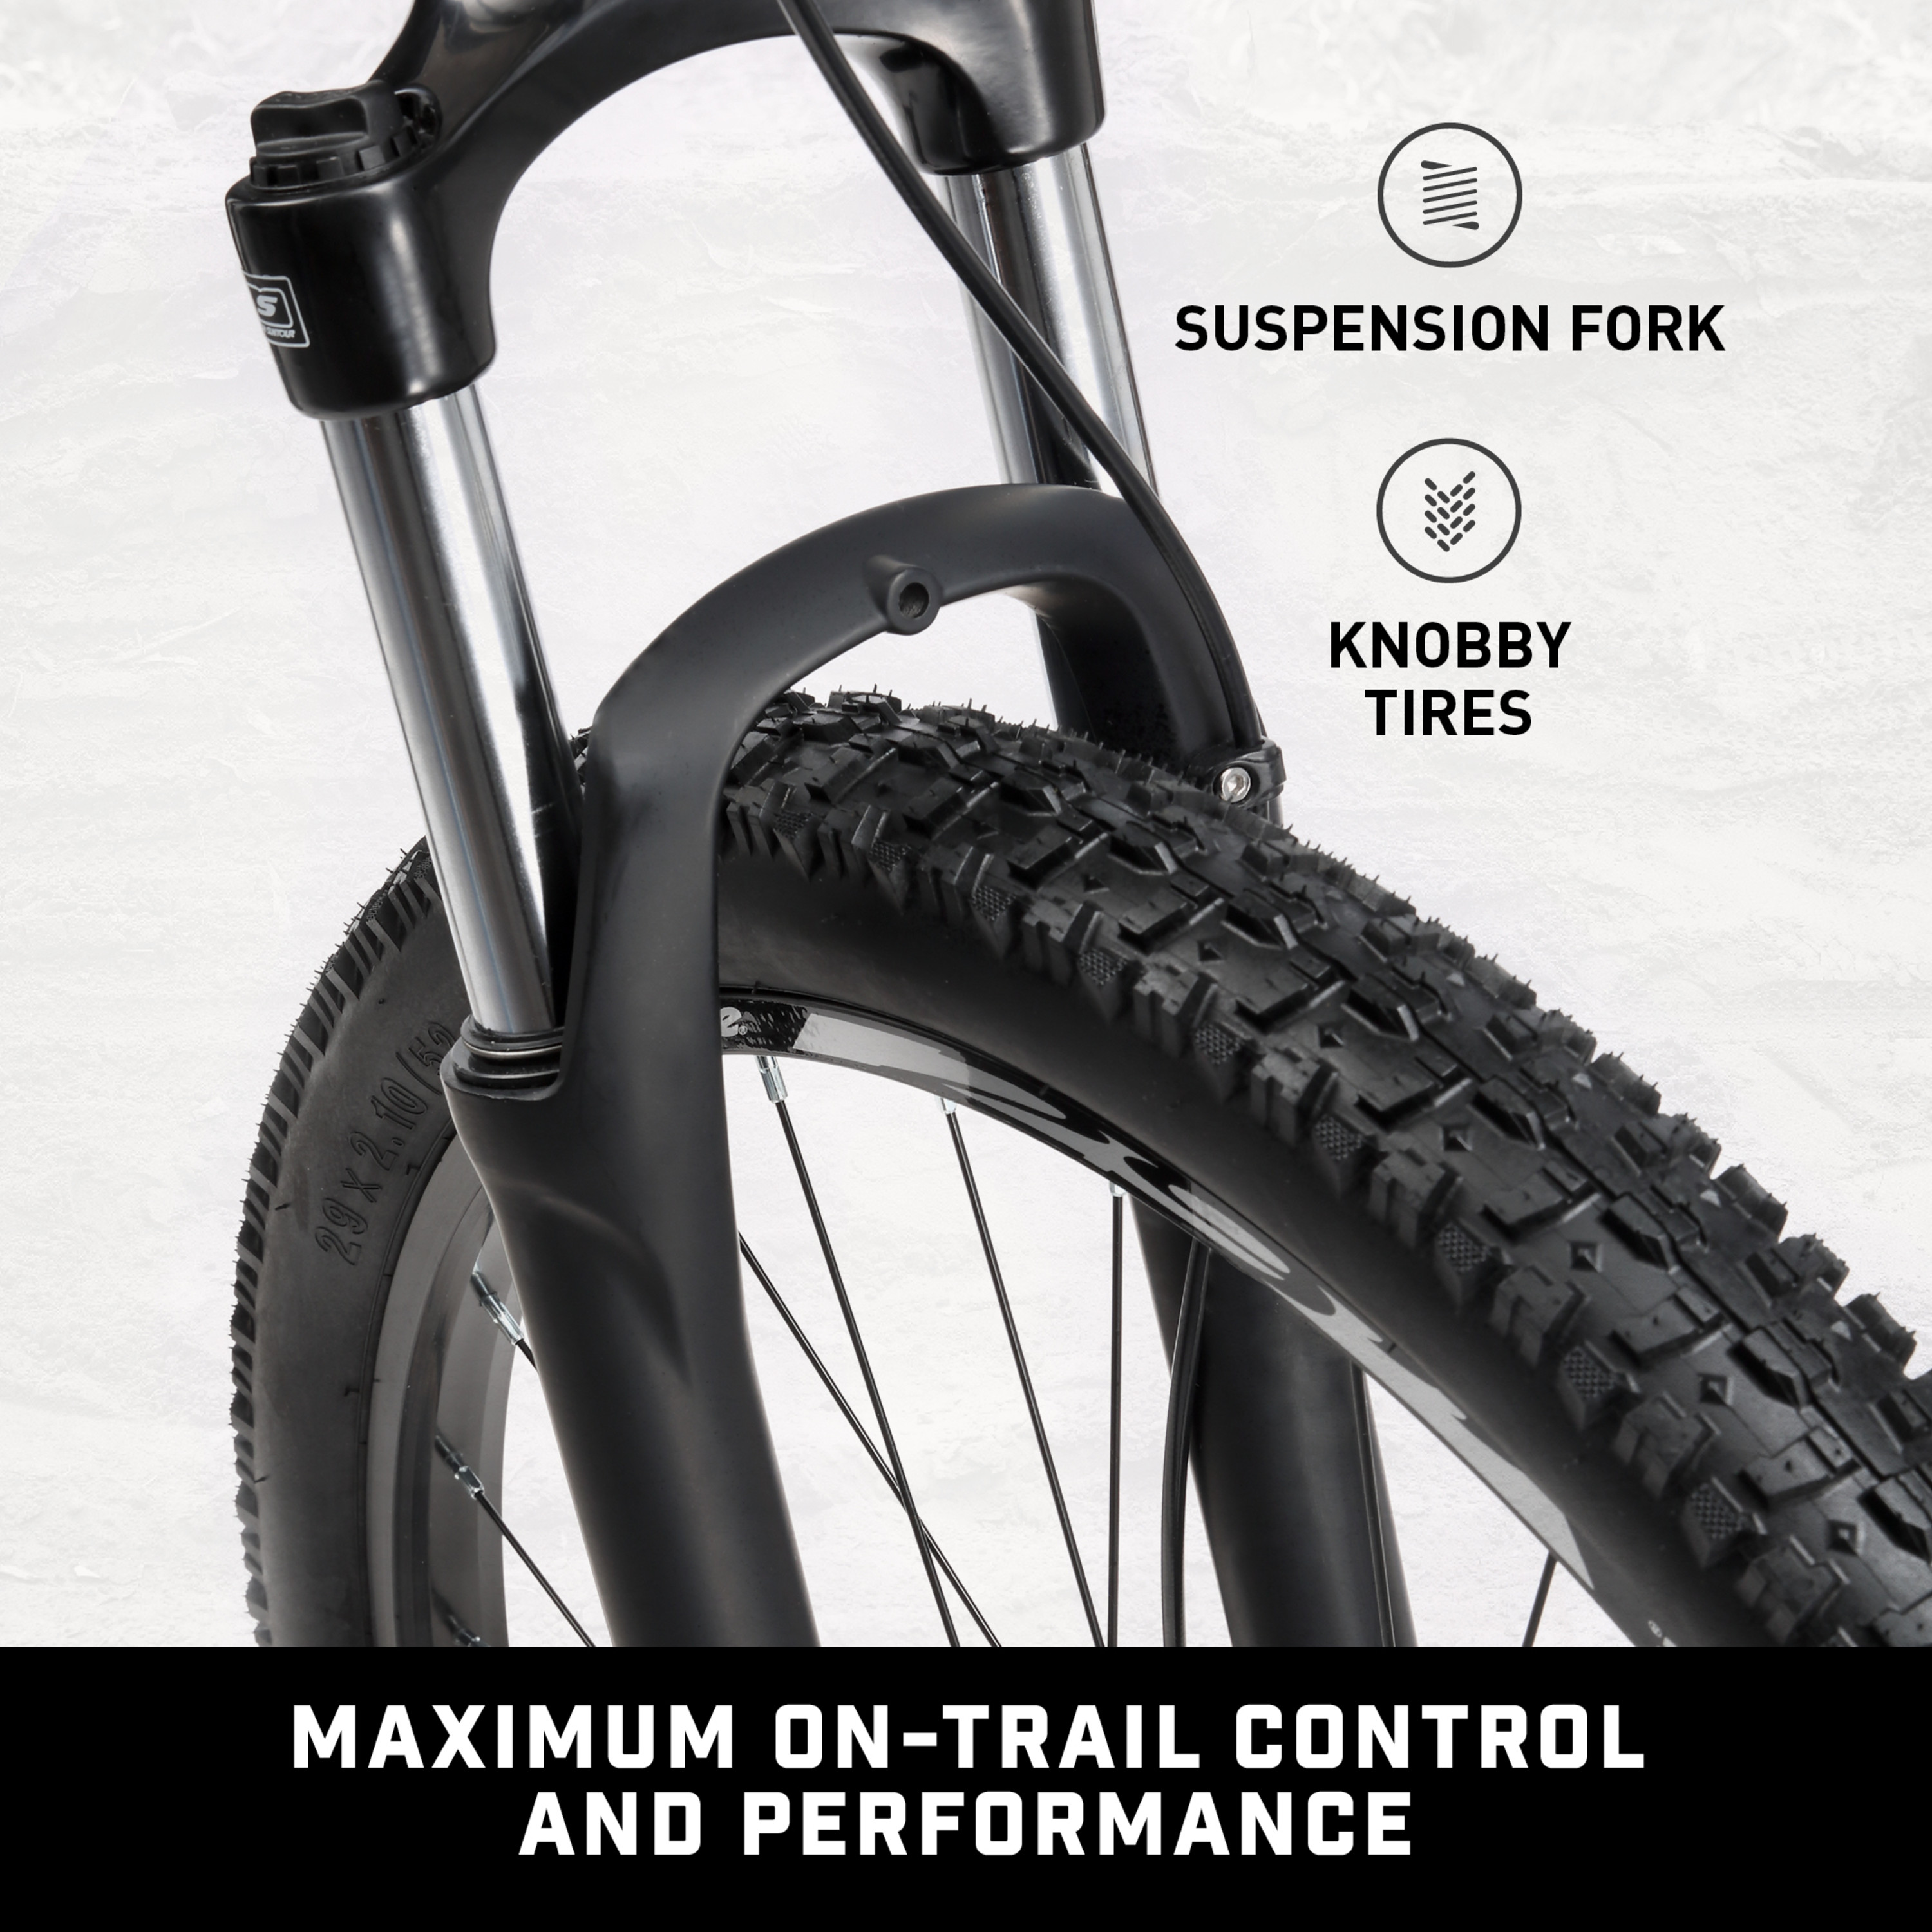 Mongoose XR-Pro Men's Mountain Bicycle, 29-inch Wheels, 24 Speeds, Black - image 3 of 8